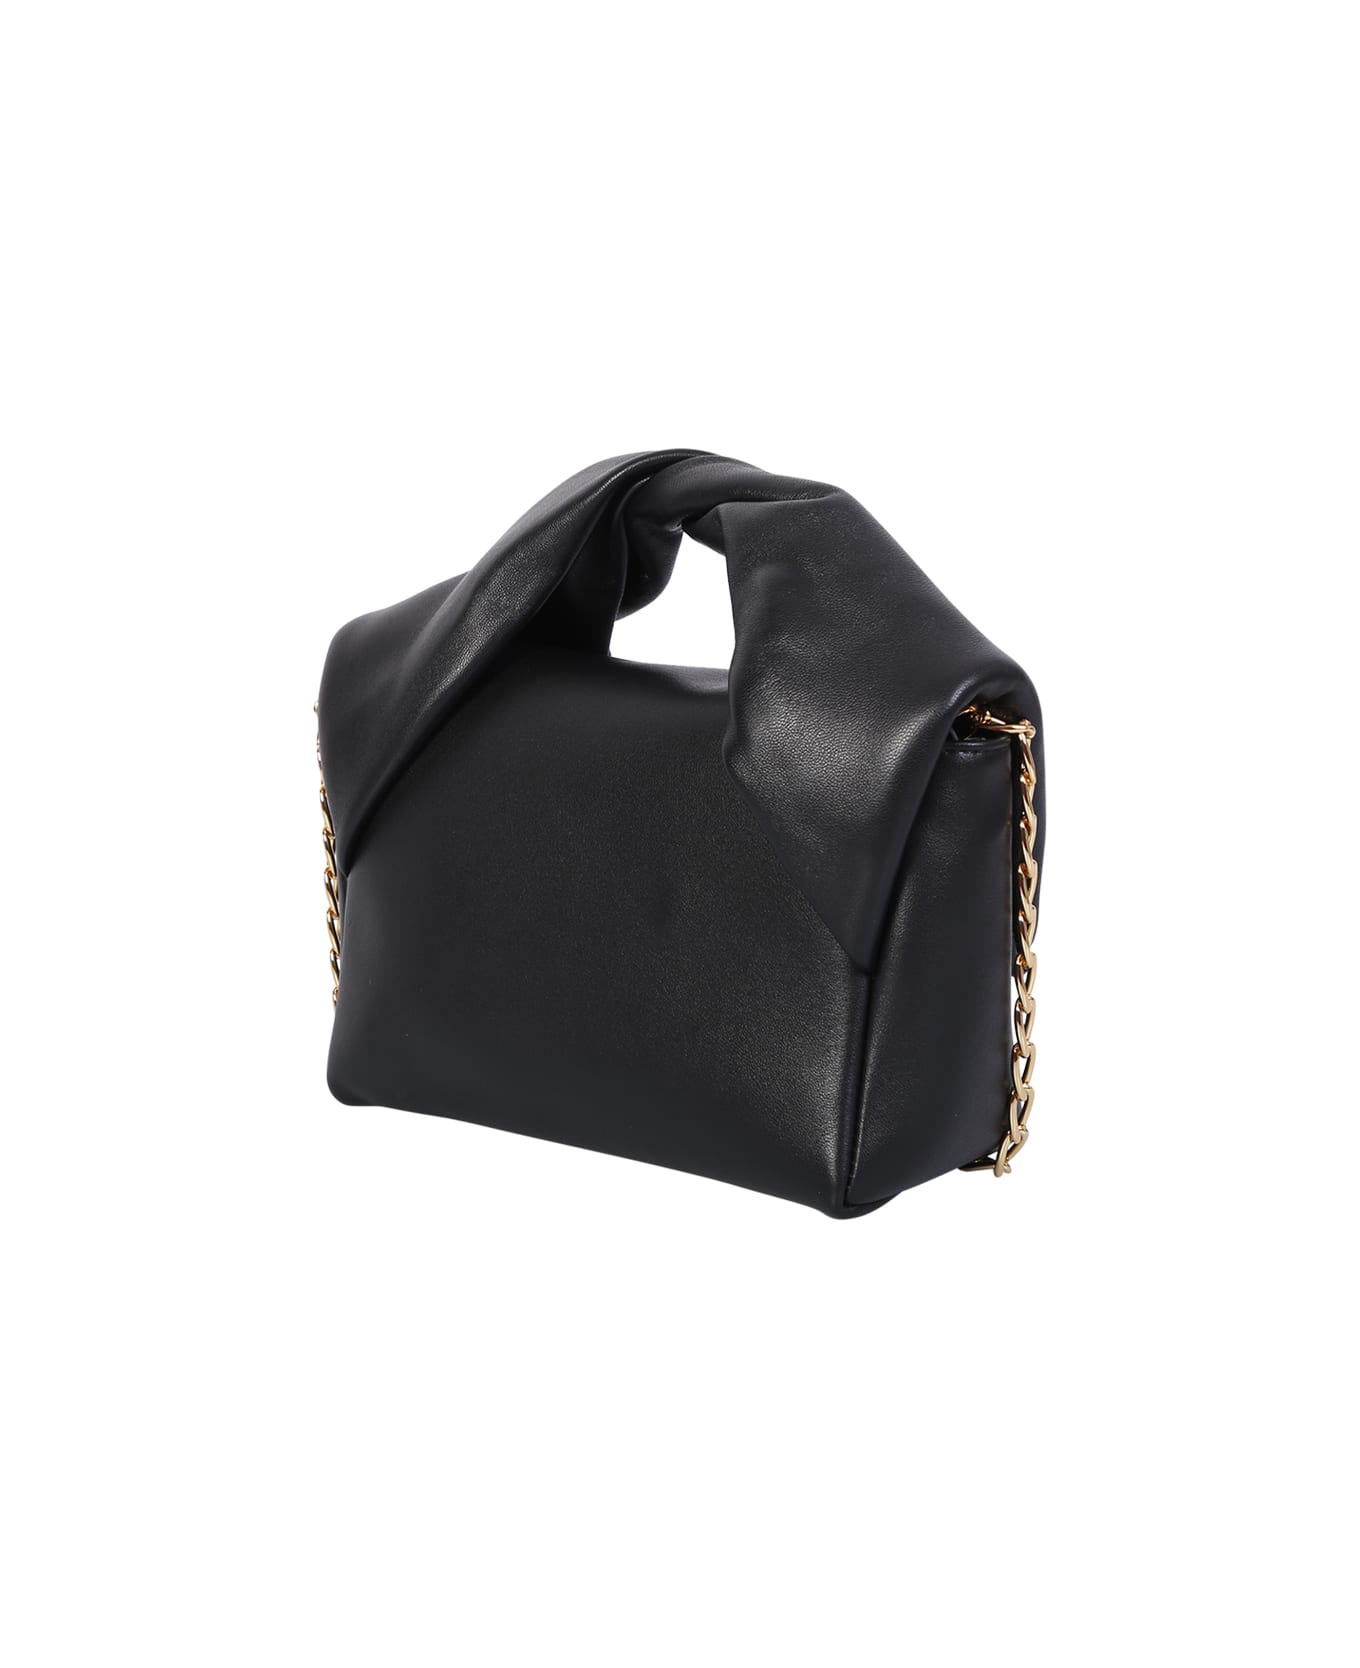 J.W. Anderson Black Leather Twister Bag - BLACK